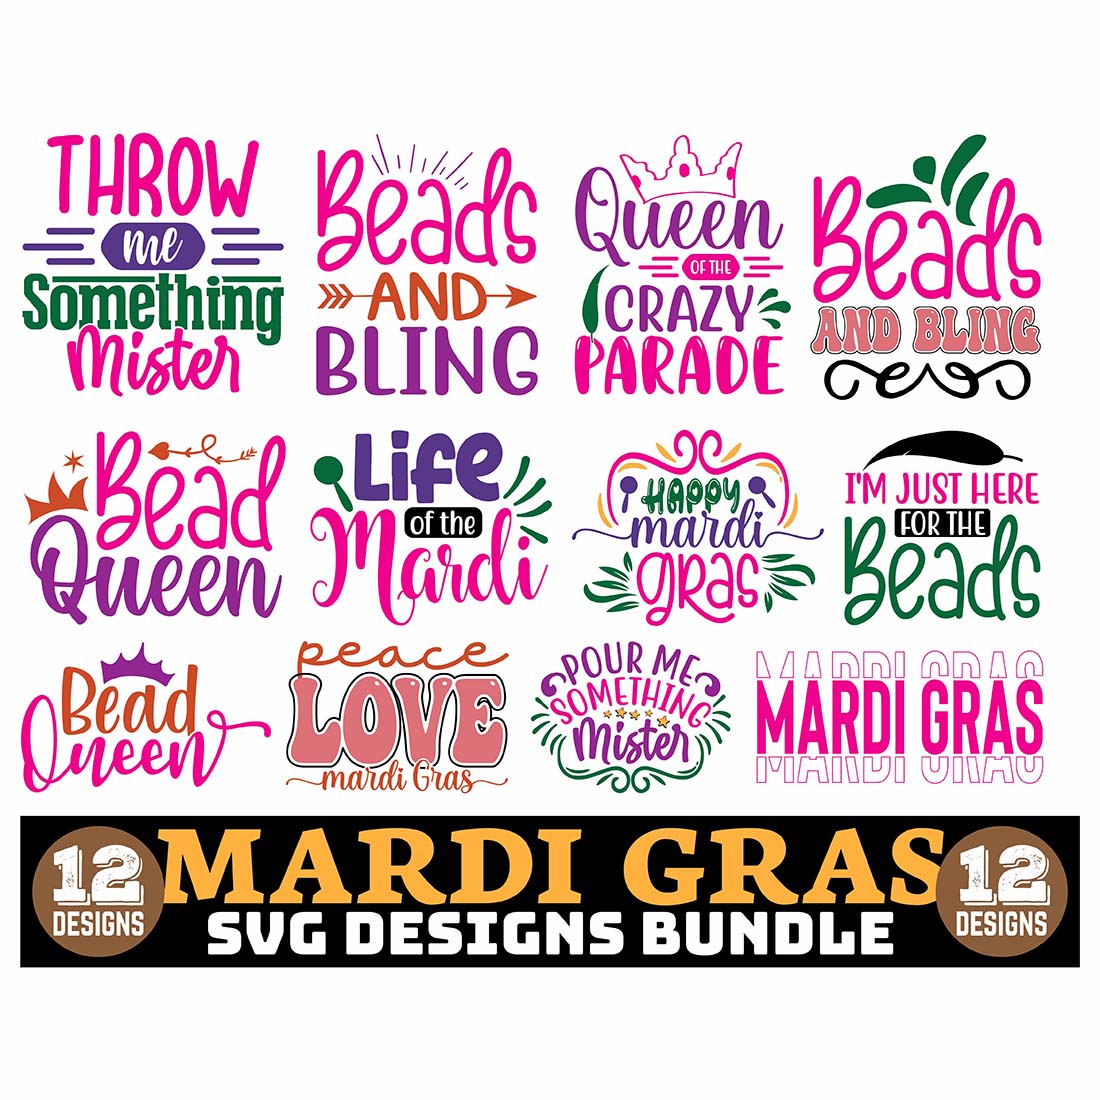 Mardi Gras SVG Designs Bundle.